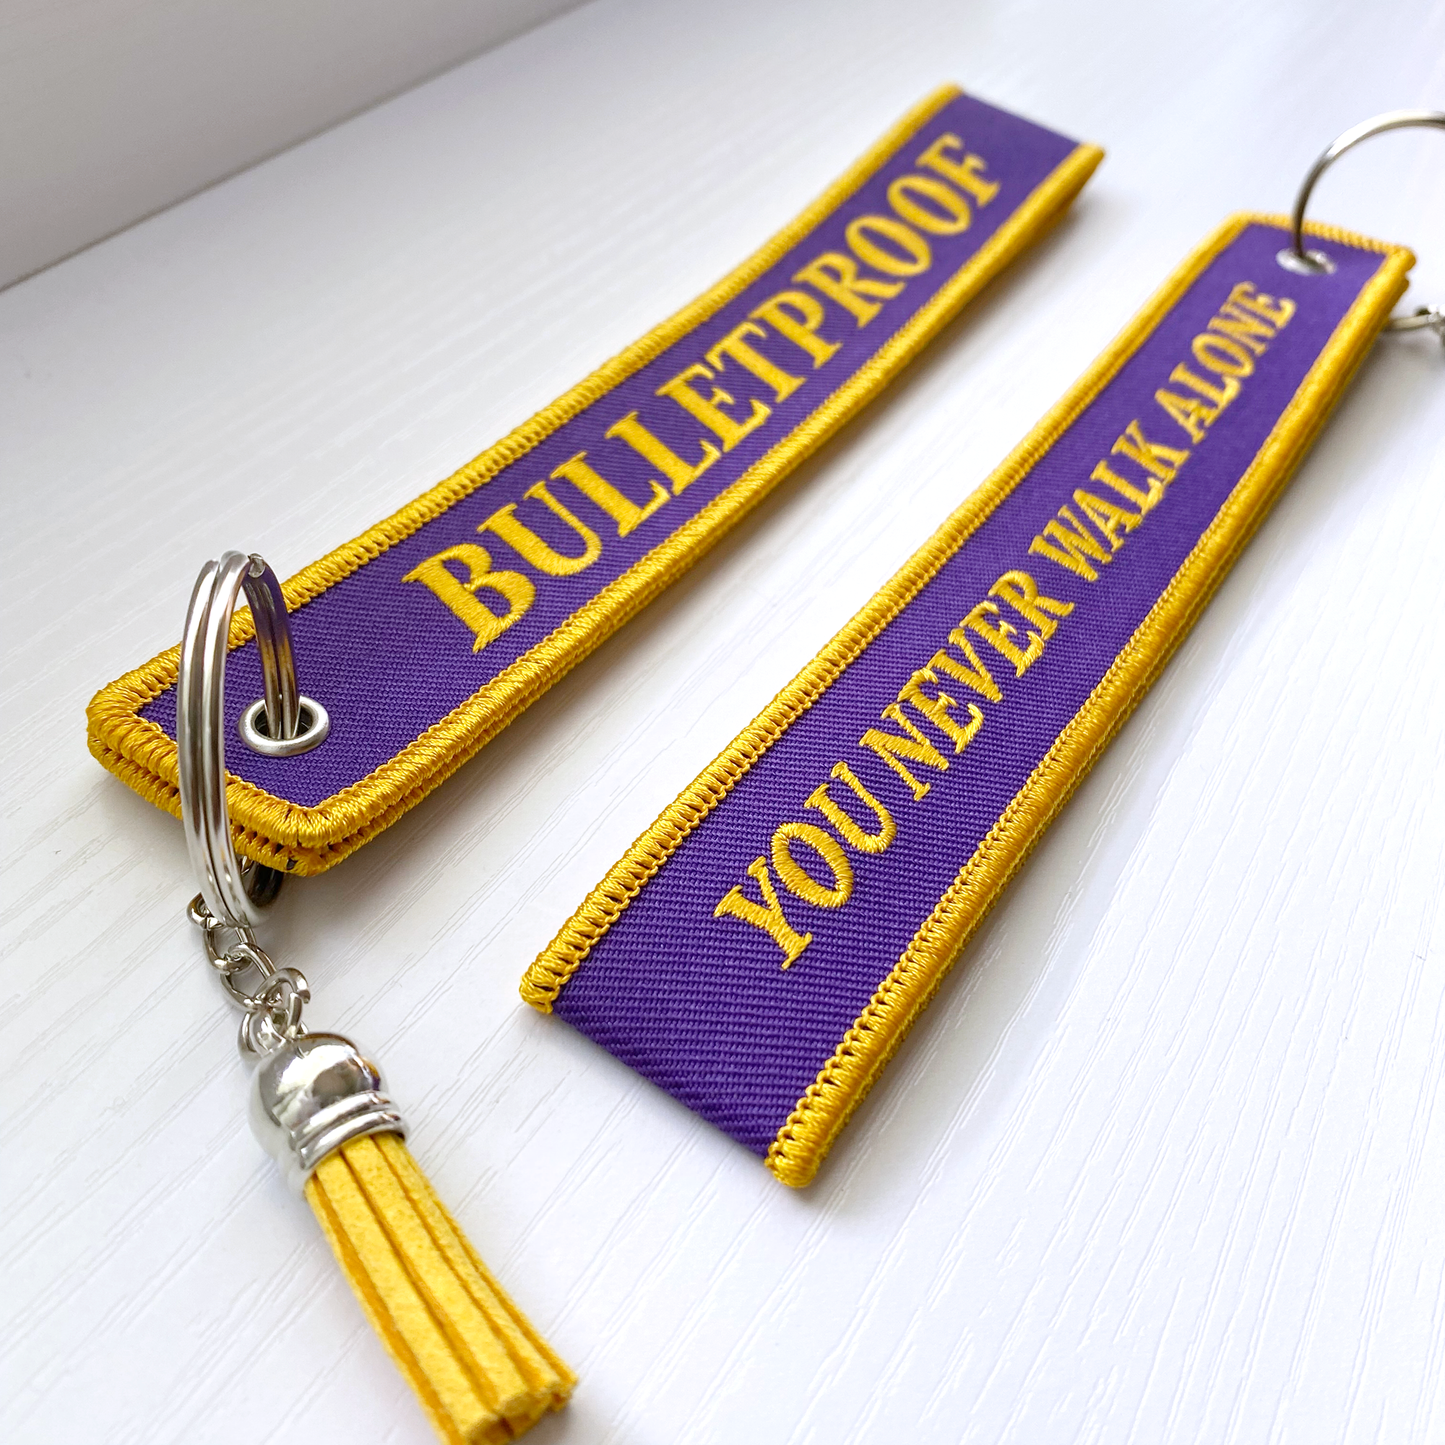 BTS Inspired "Bulletproof" Embroidered Keychain Wristlet